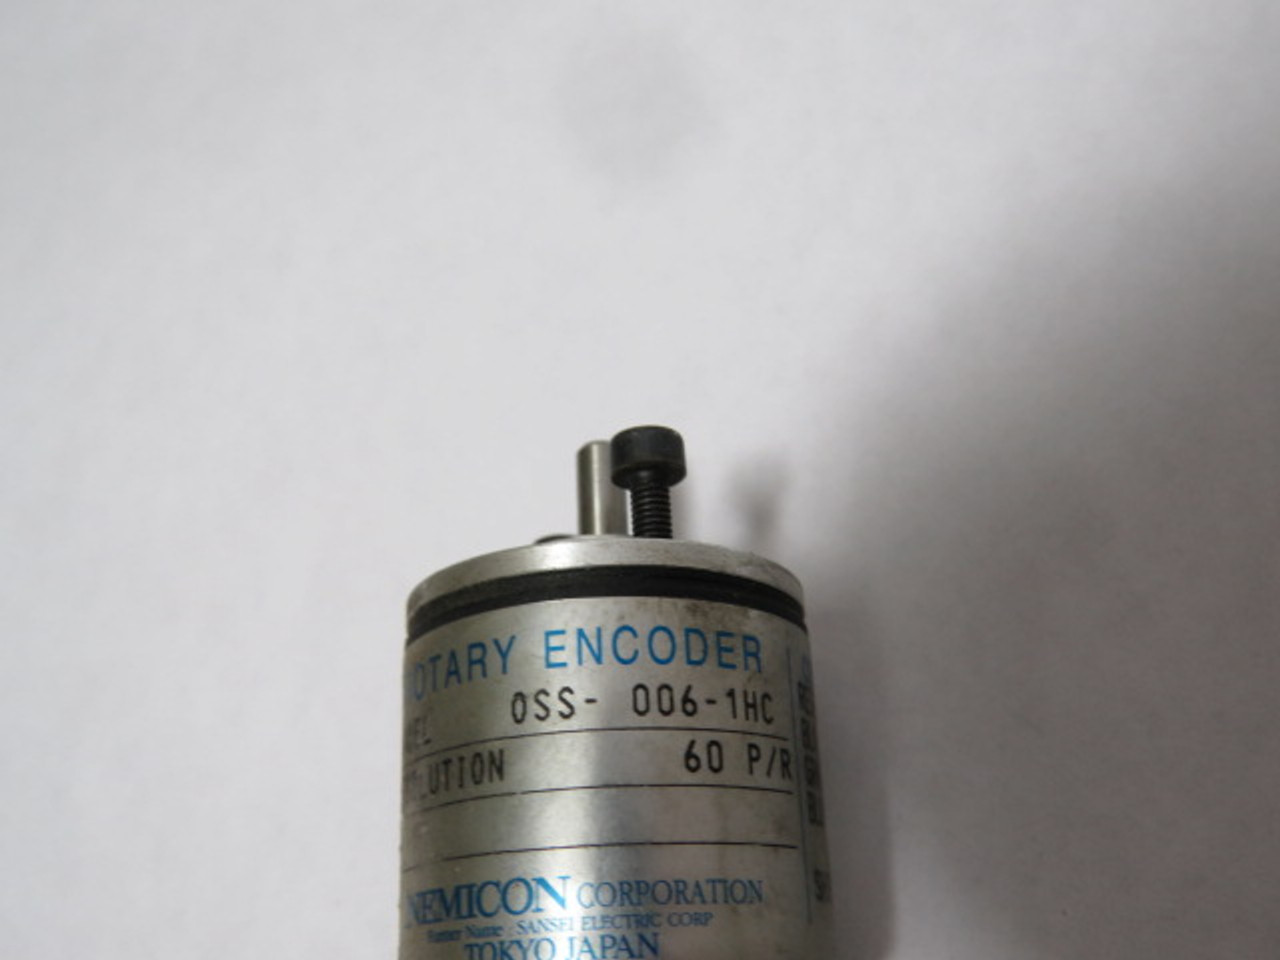 Nemicon OSS-006-1HC Rotary Encoder w/60 P/R Resolution USED